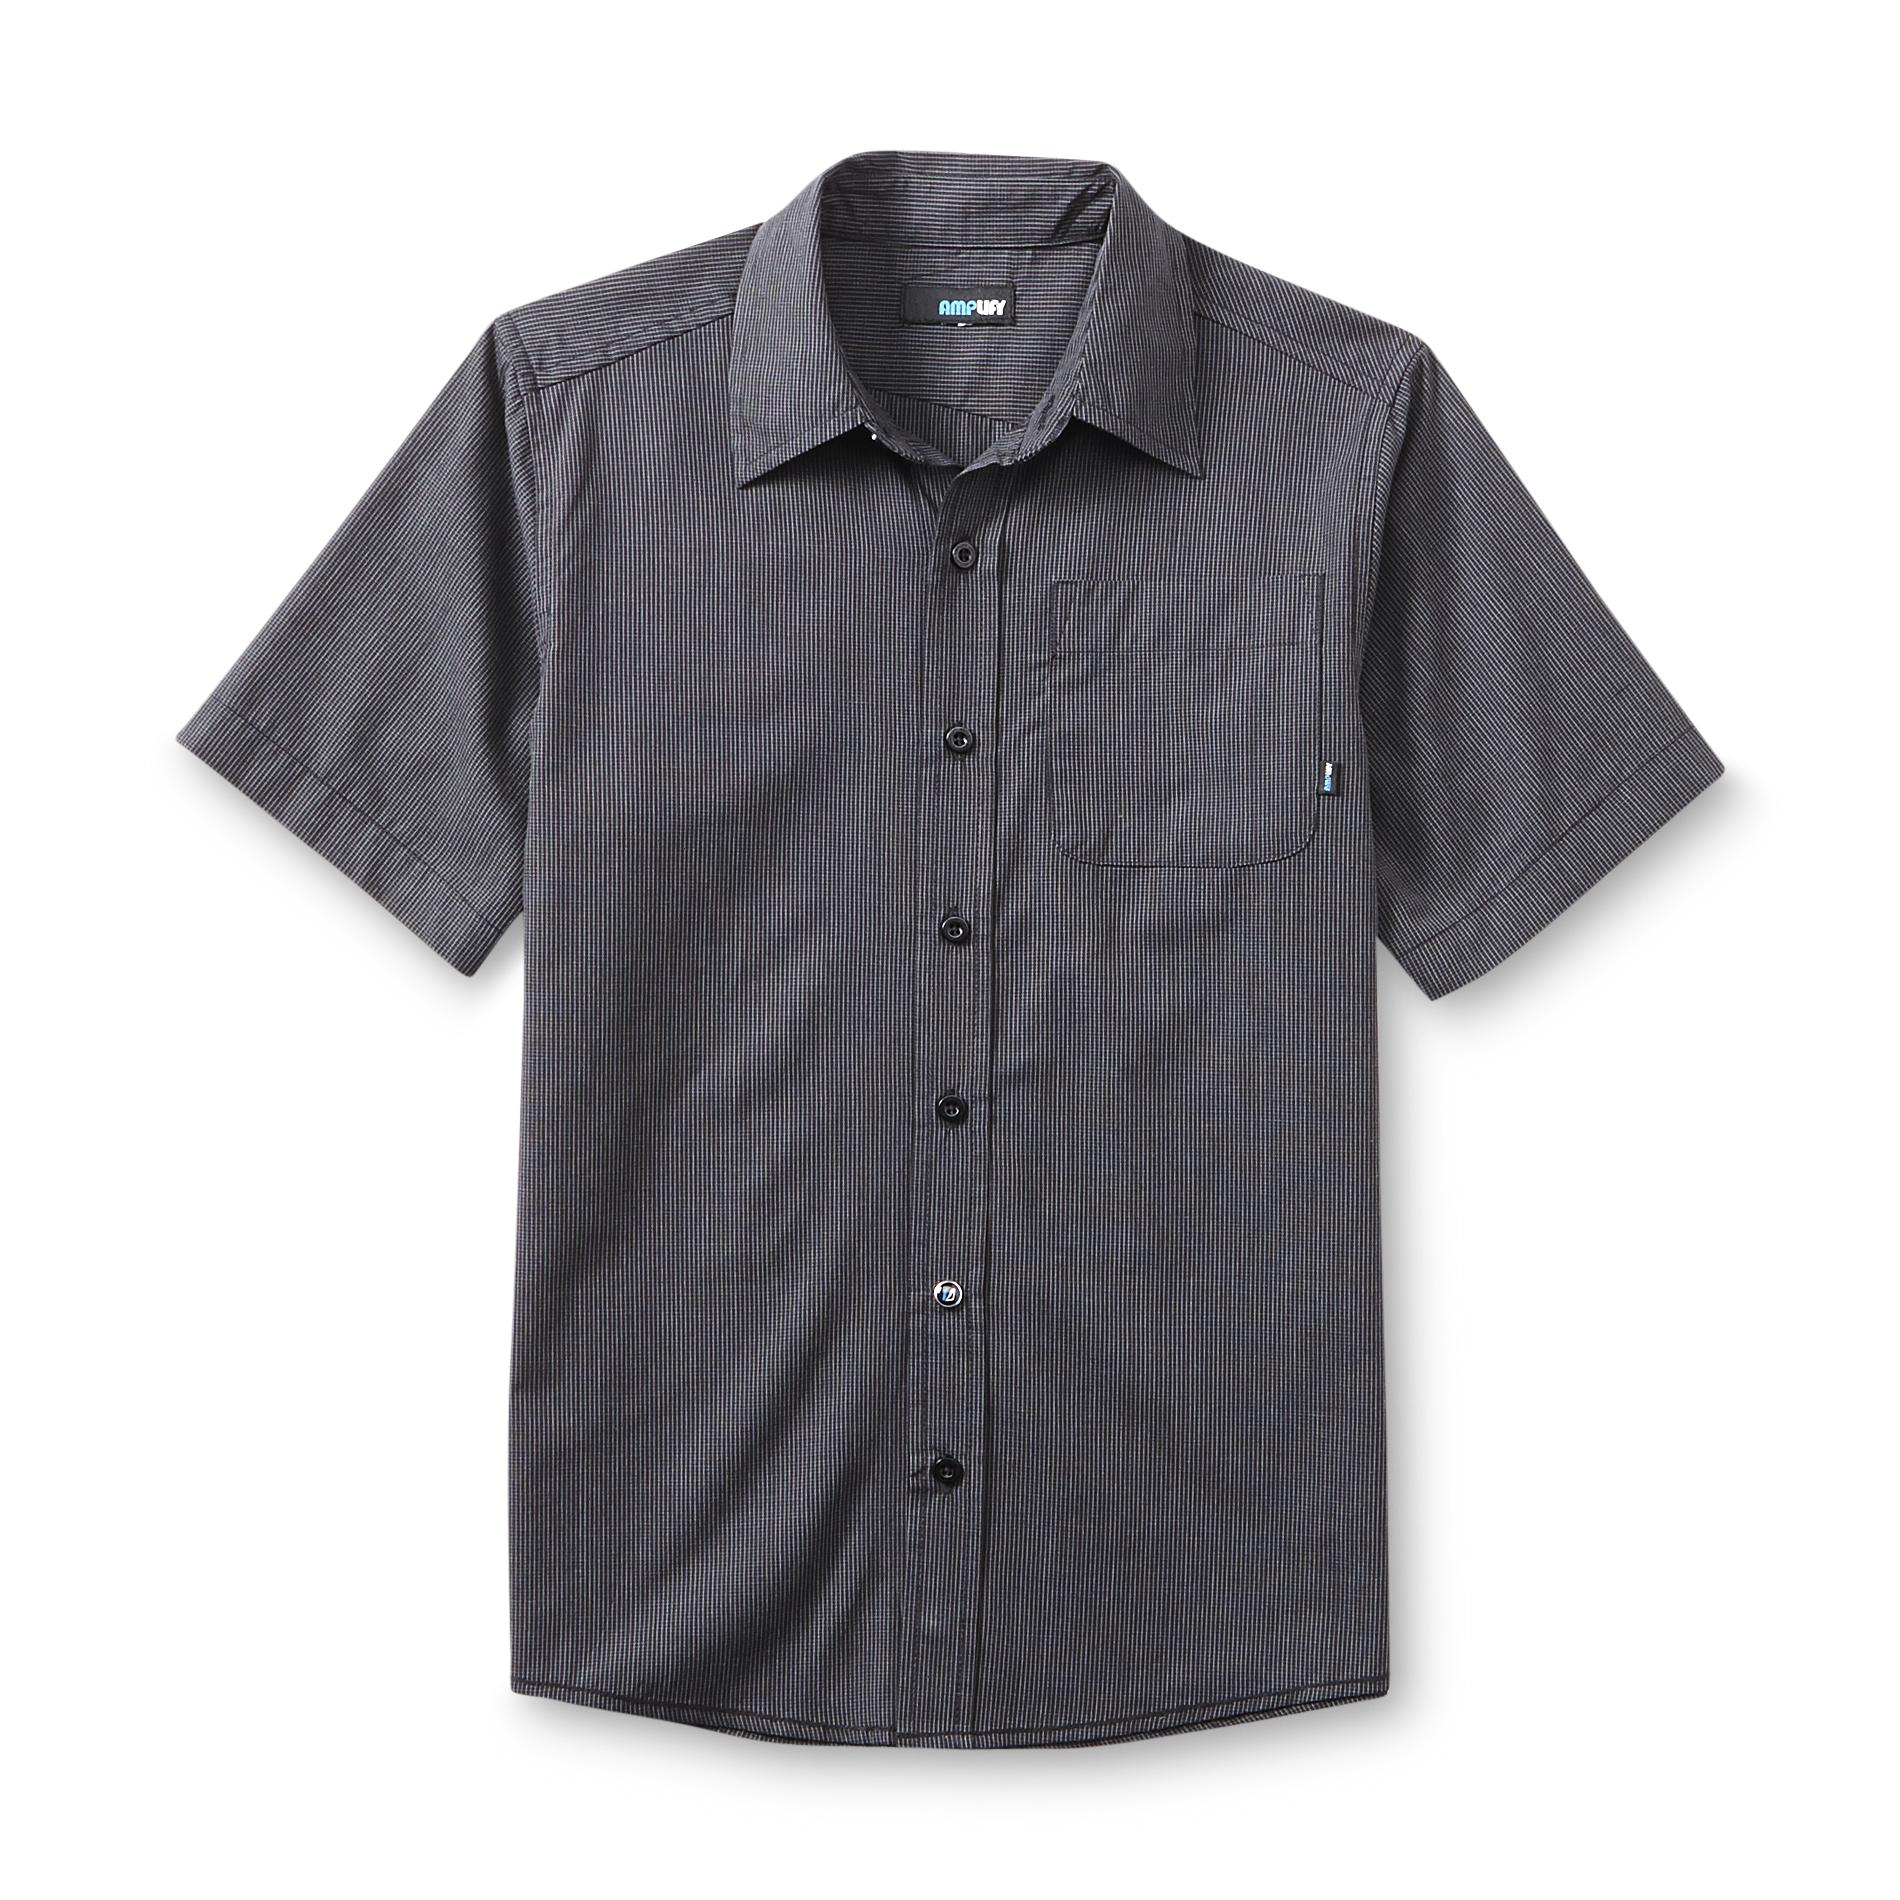 Amplify Boy's Short-Sleeve Shirt - Grid Pattern